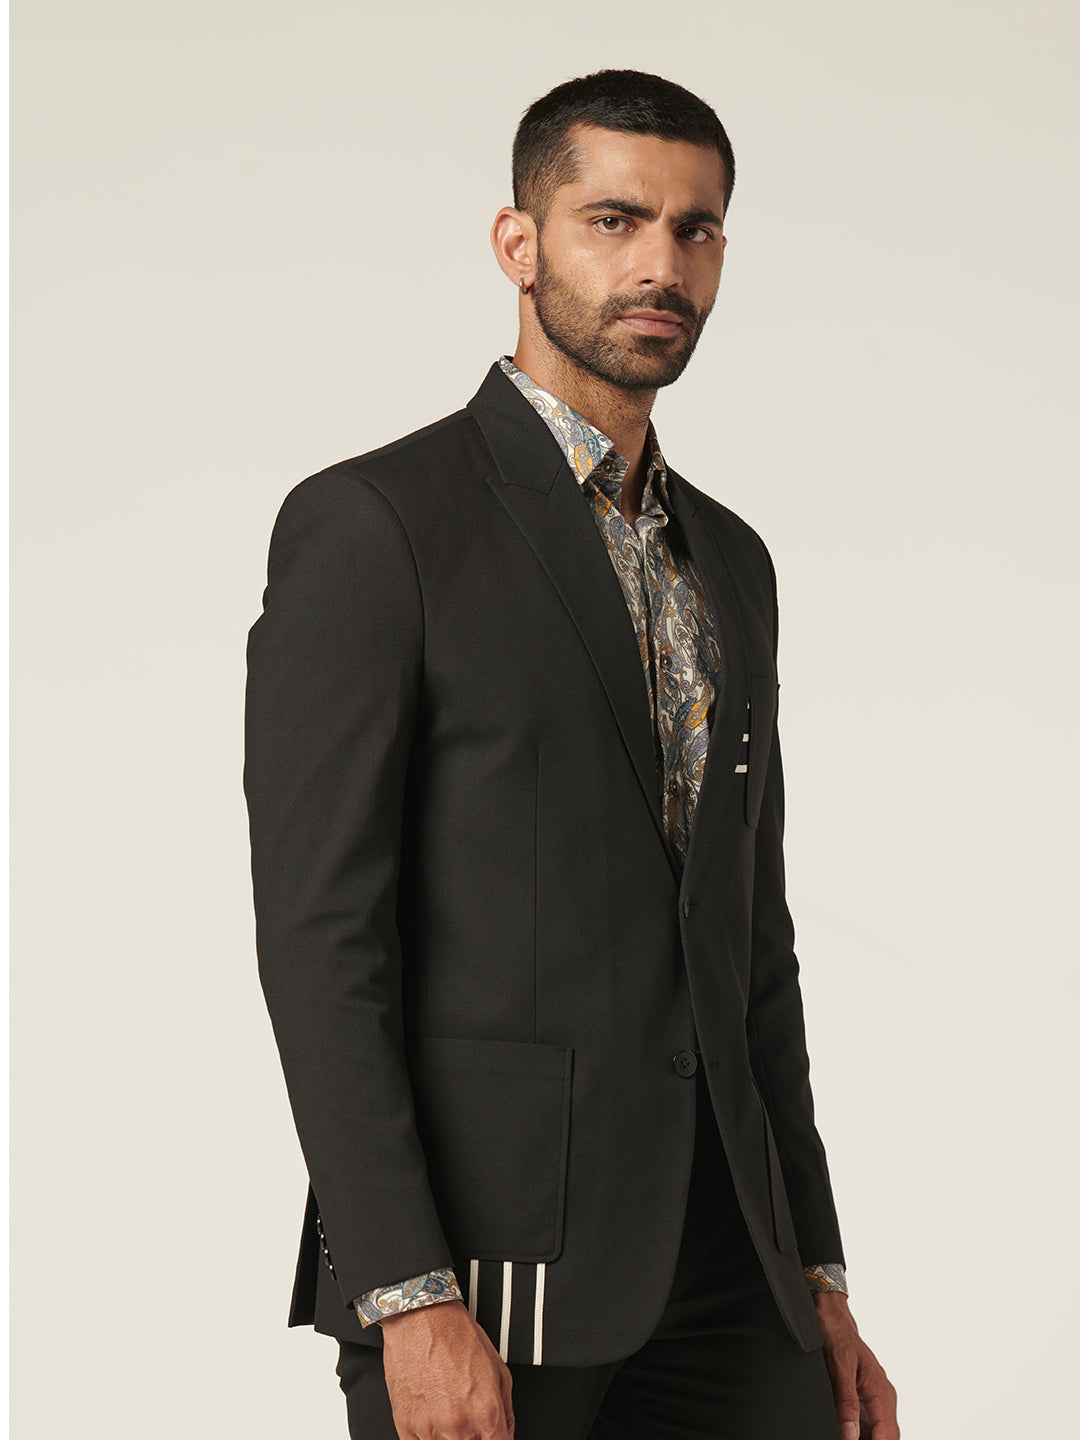 CANALI Slim-Fit Wool Suit for Men | MR PORTER